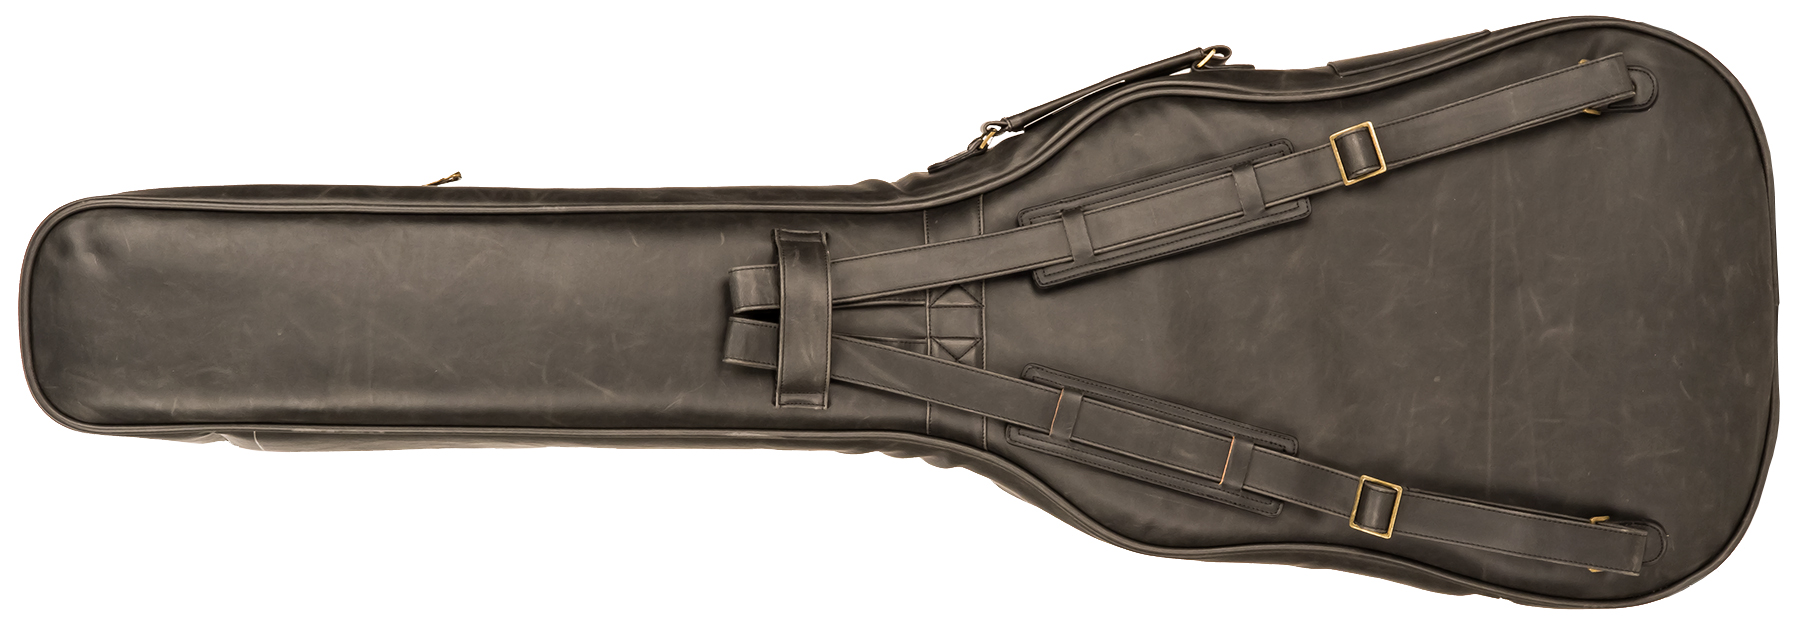 X-tone 2035 Bas-bk Deluxe Leather Electric Bass Bag Cuir Matt Black - Elektrische bashoes - Variation 1